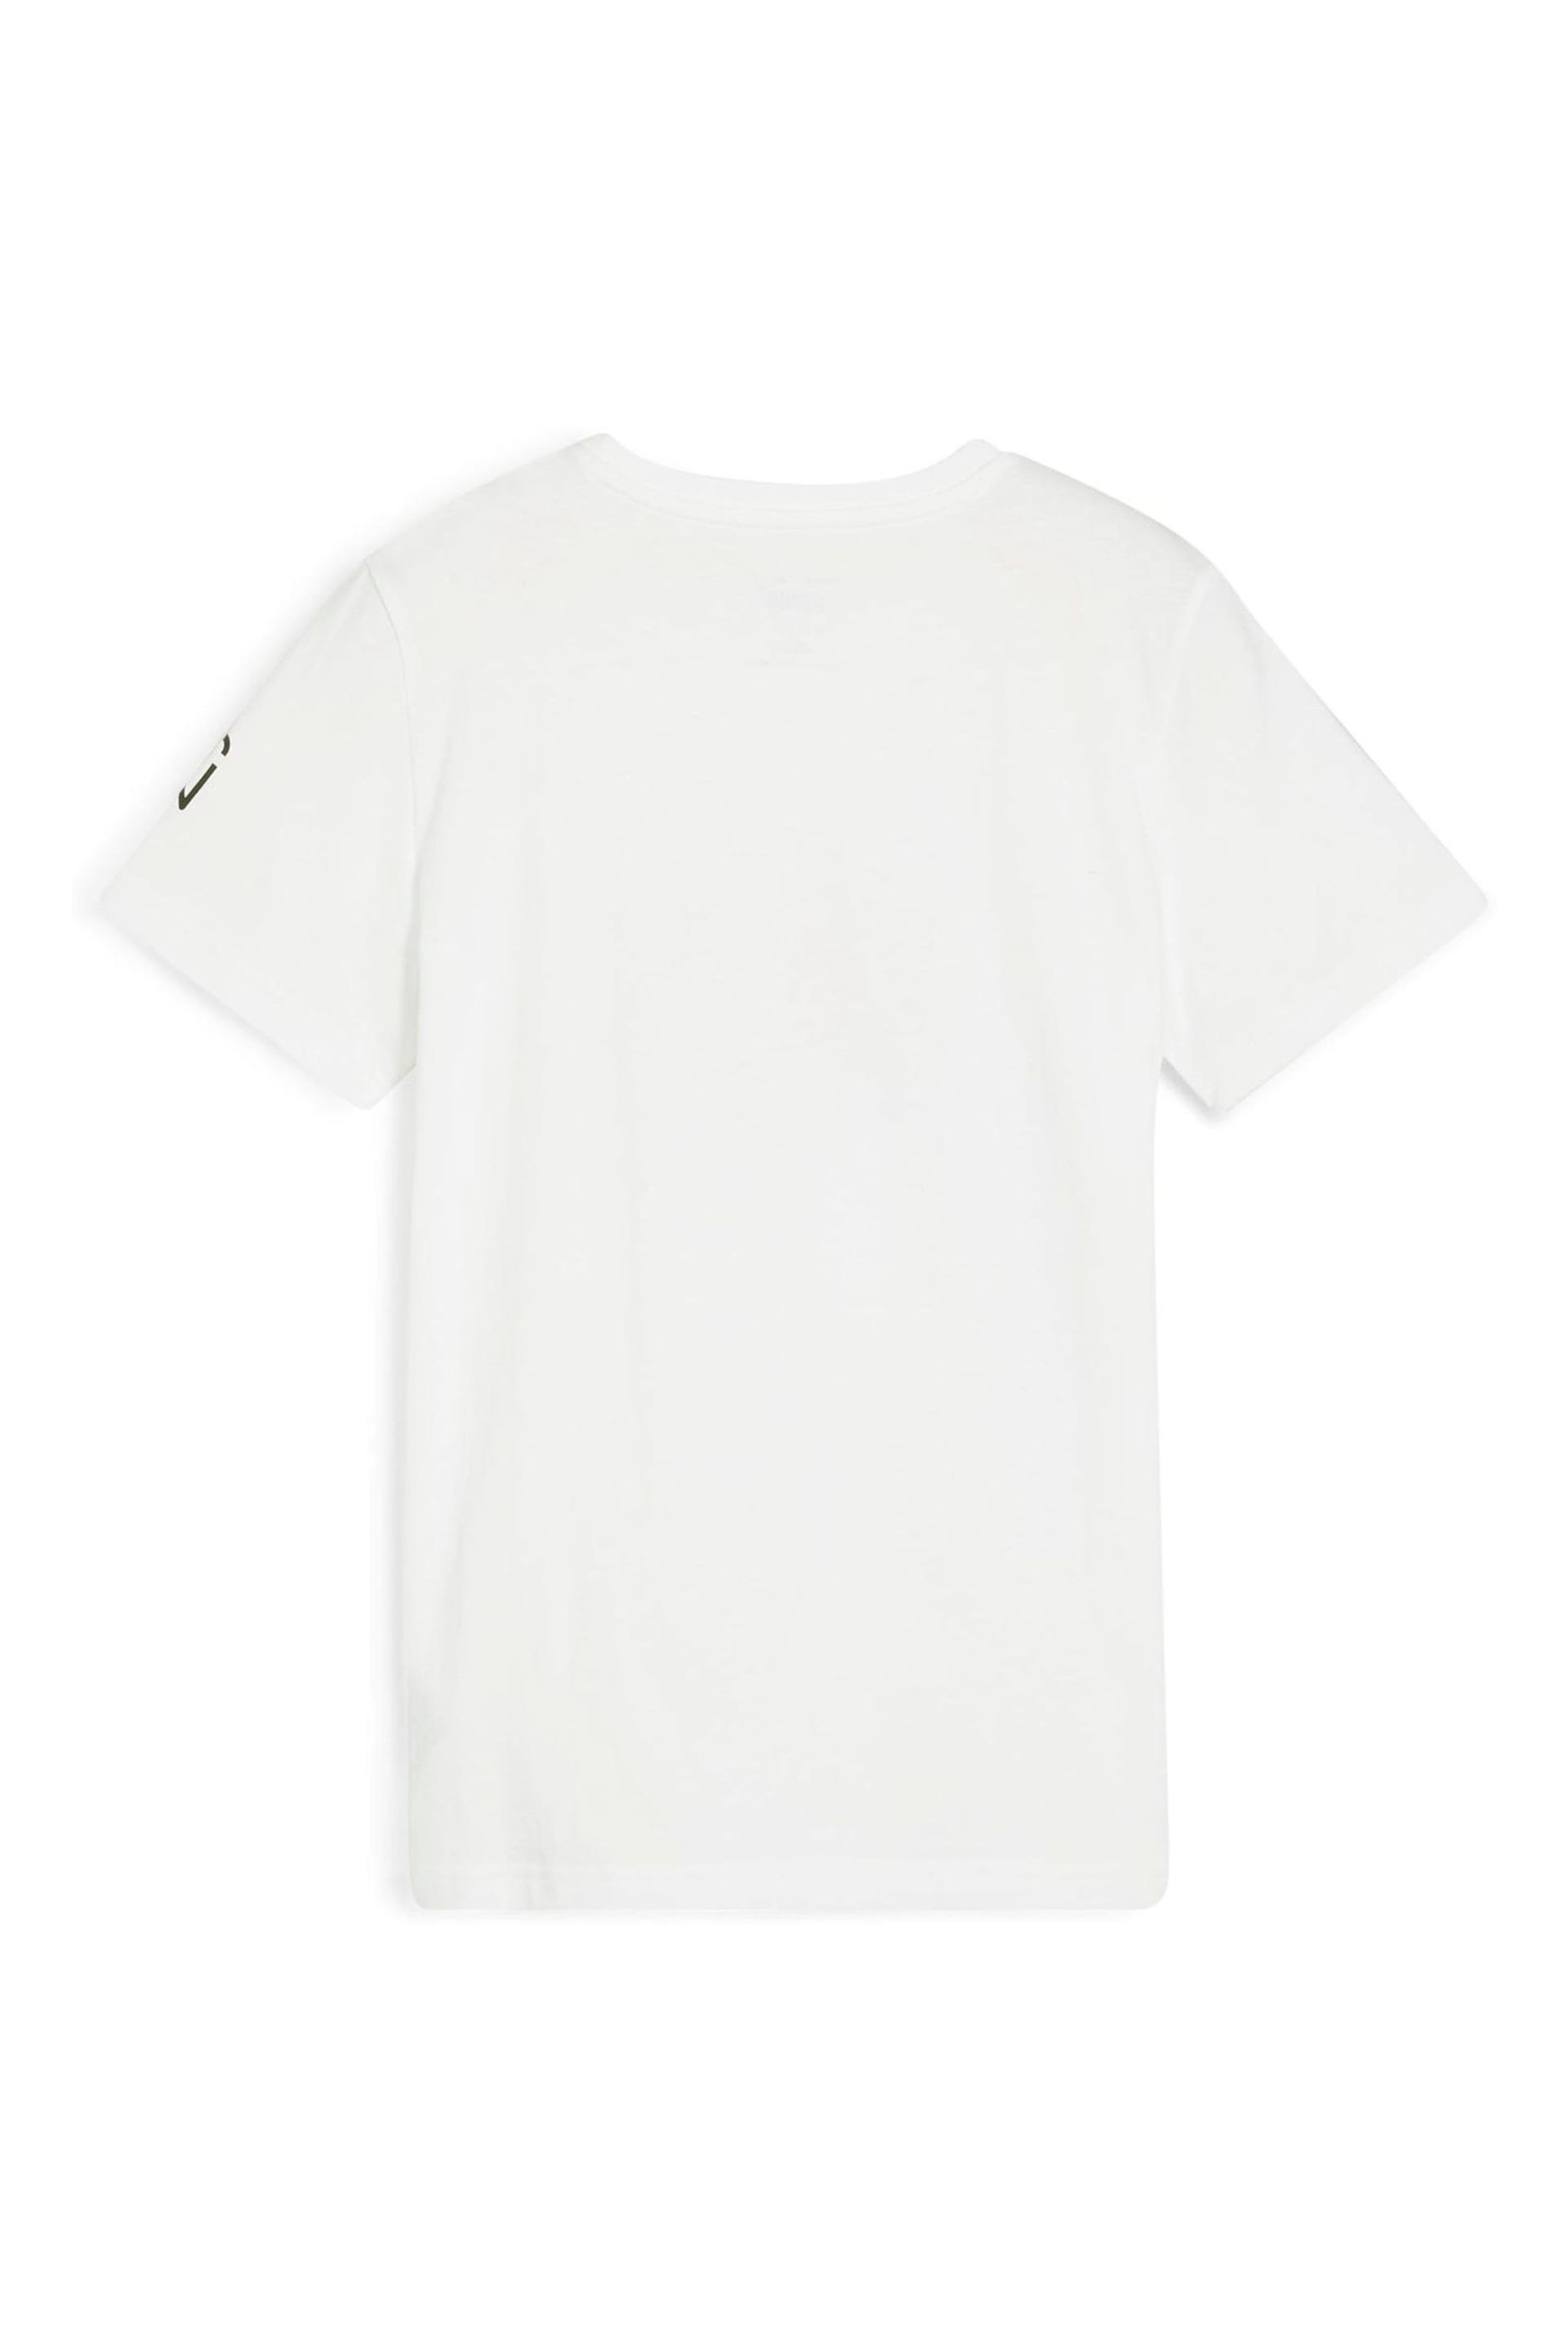 Puma Black Neymar JR T-Shirt - Image 2 of 2